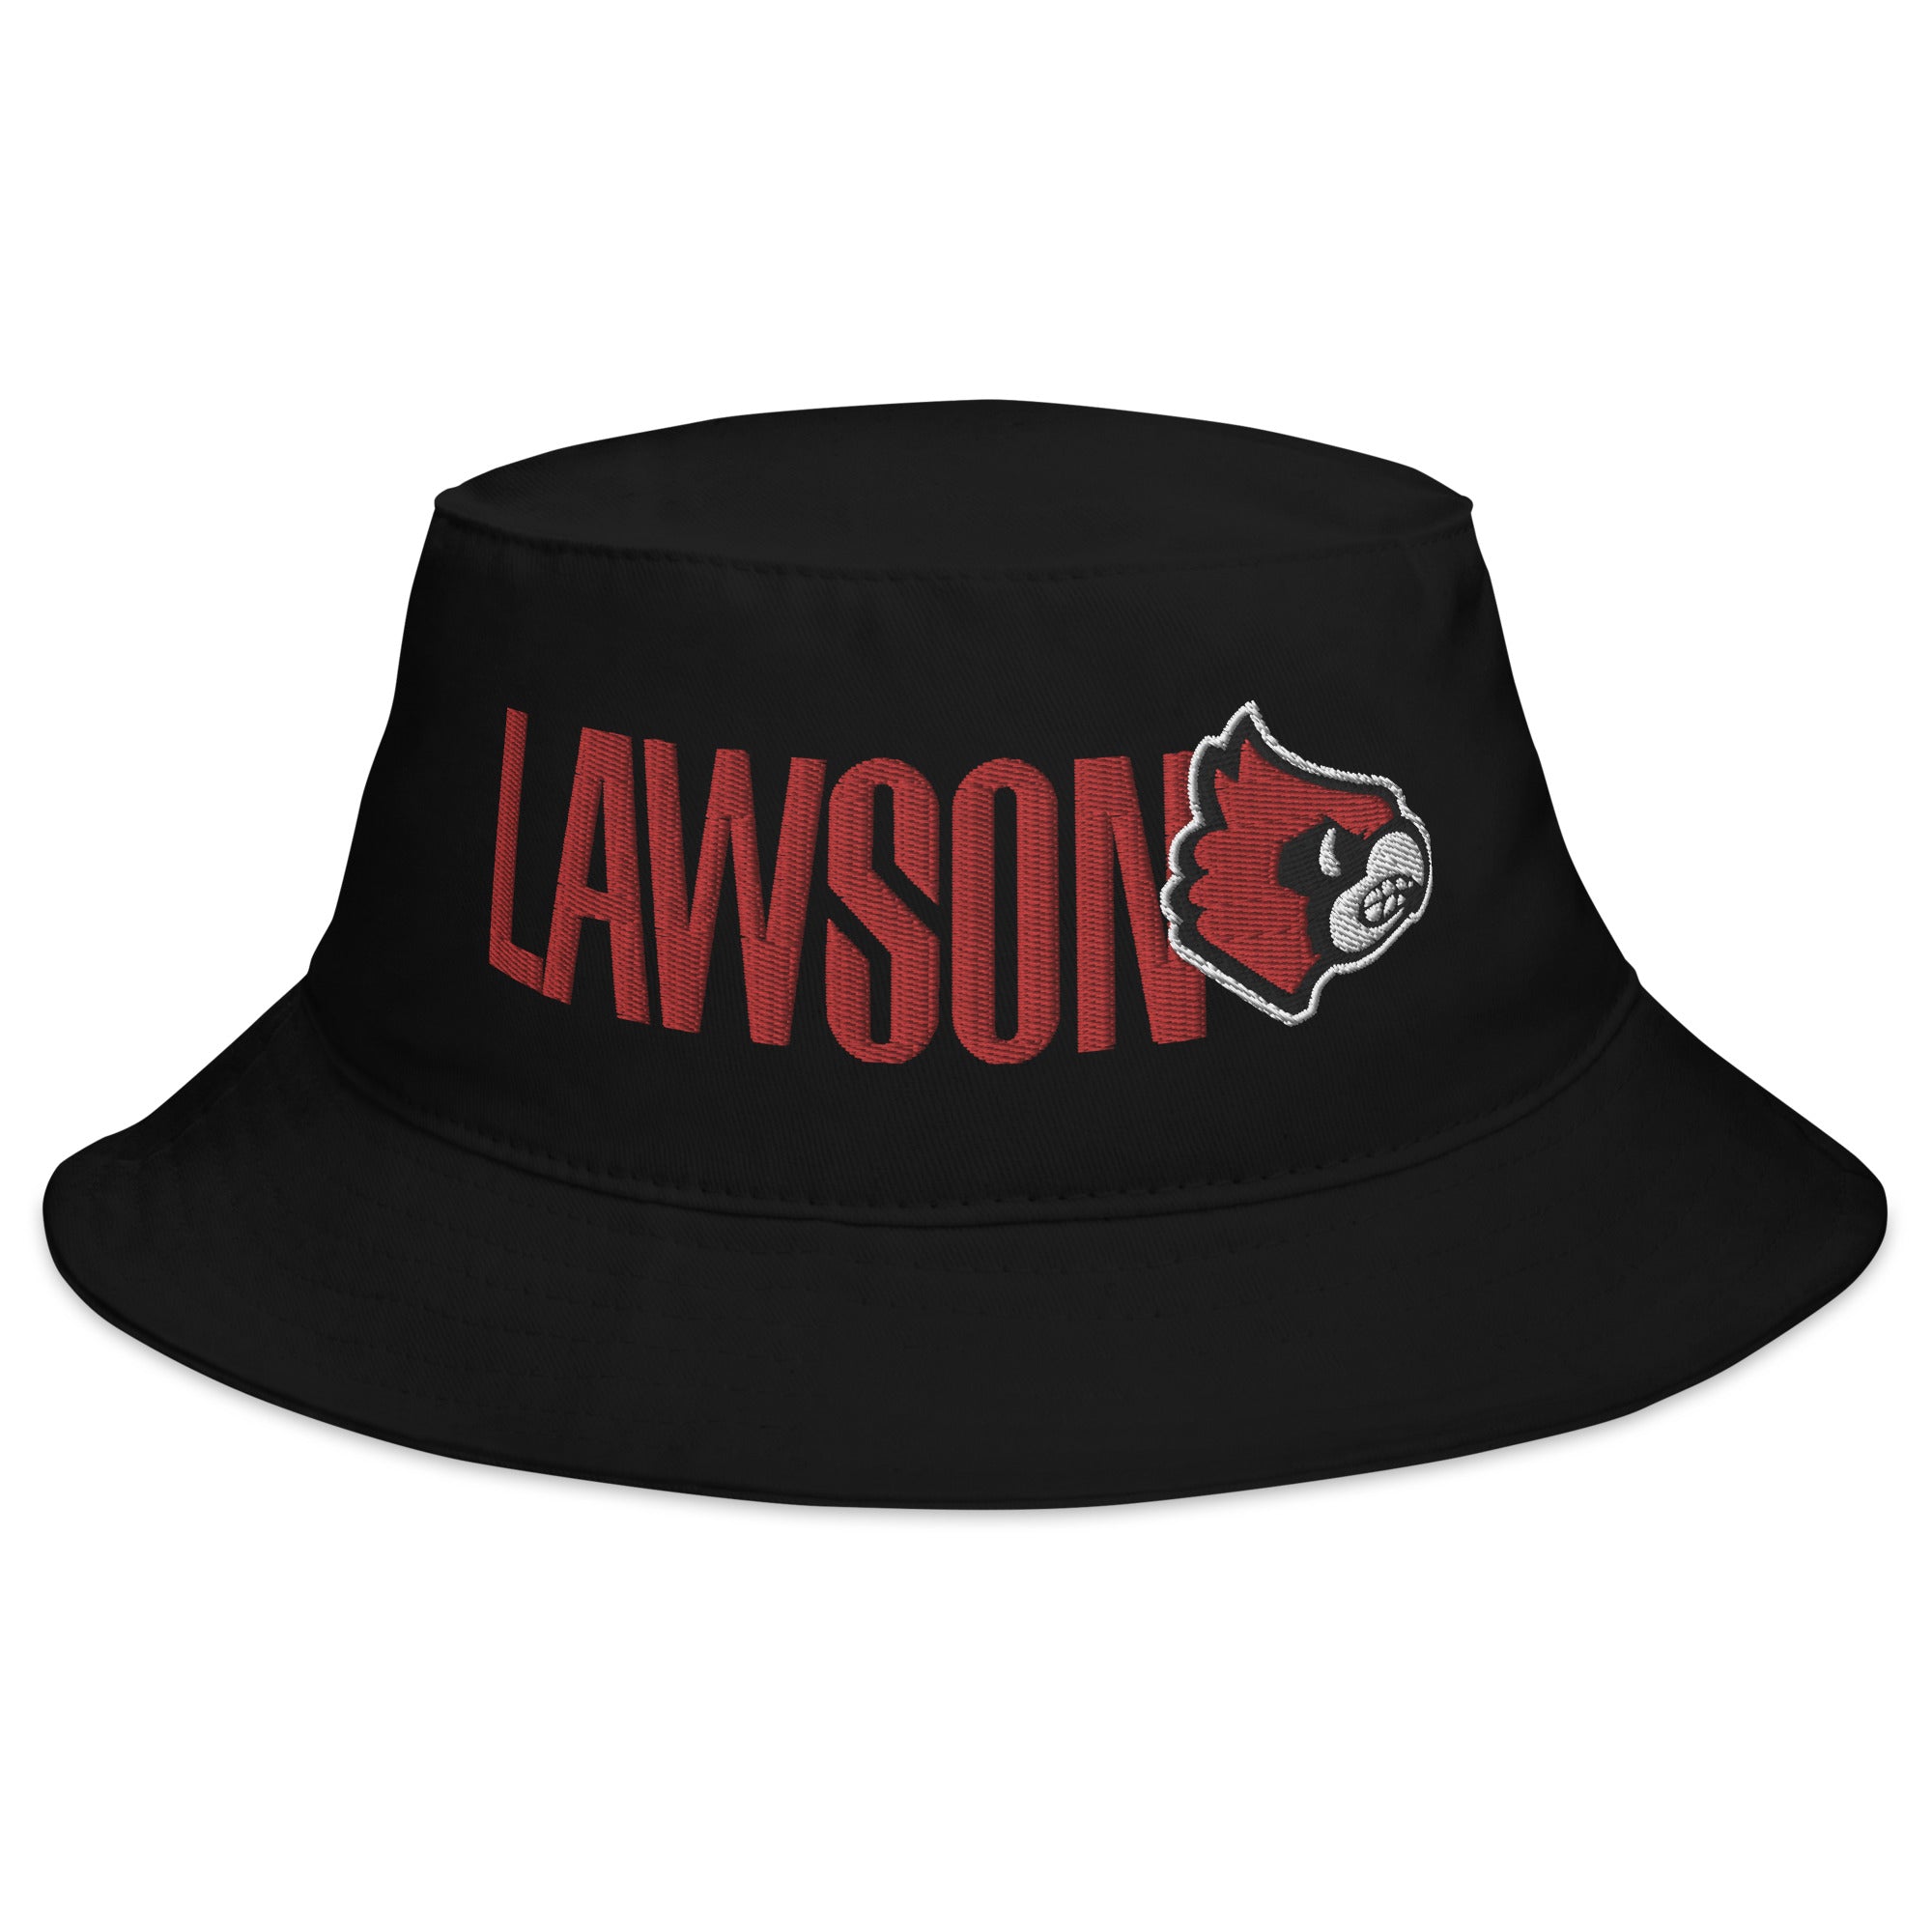 Lawson Wrestling Bucket Hat